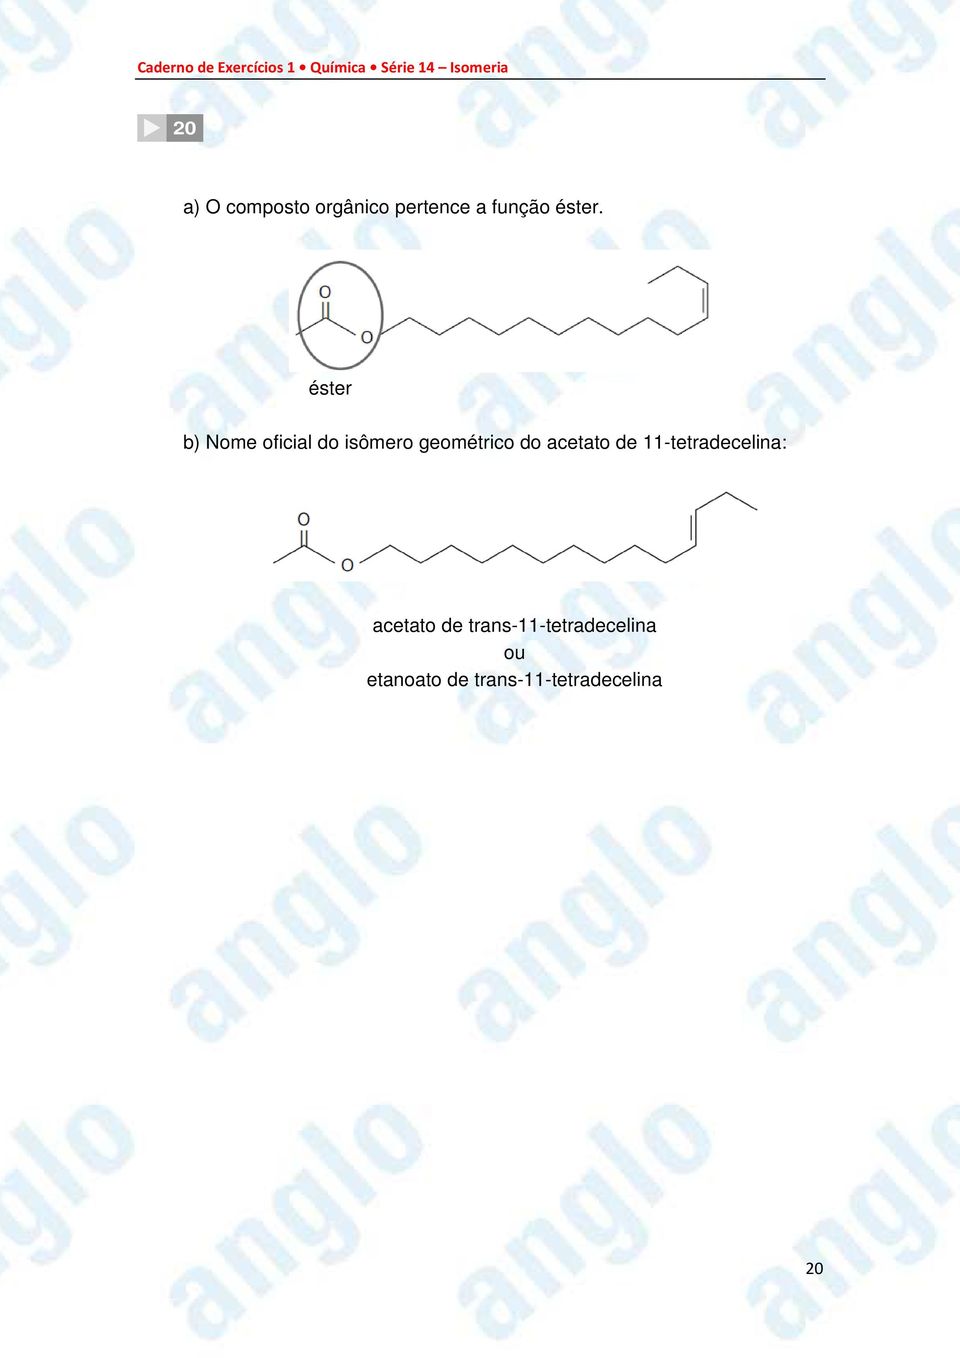 acetato de 11-tetradecelina: acetato de